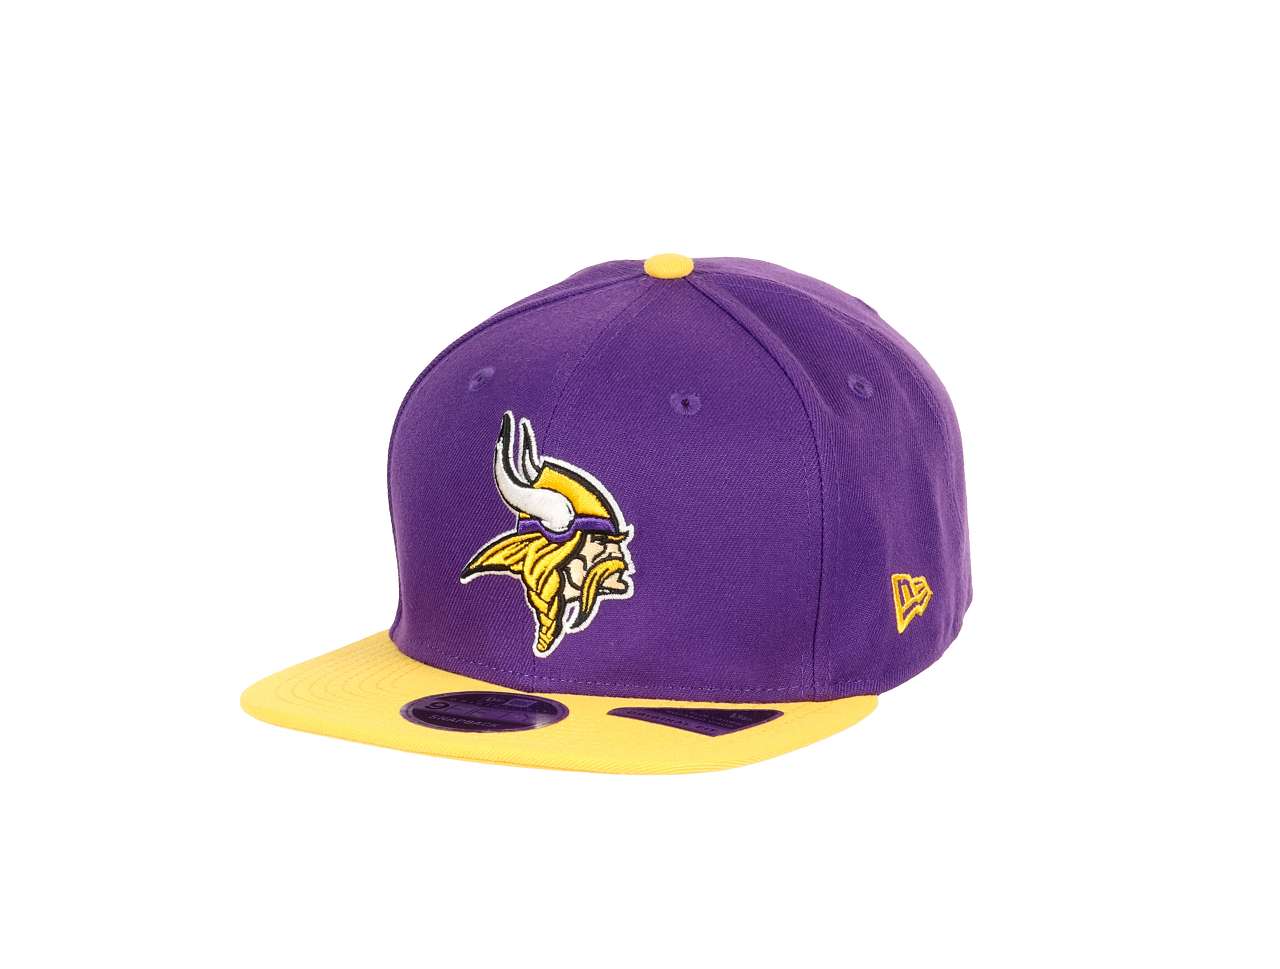 Minnesota Vikings NFL Two Tone Purple Yellow 9Fifty Original Fit Snapback Cap New Era